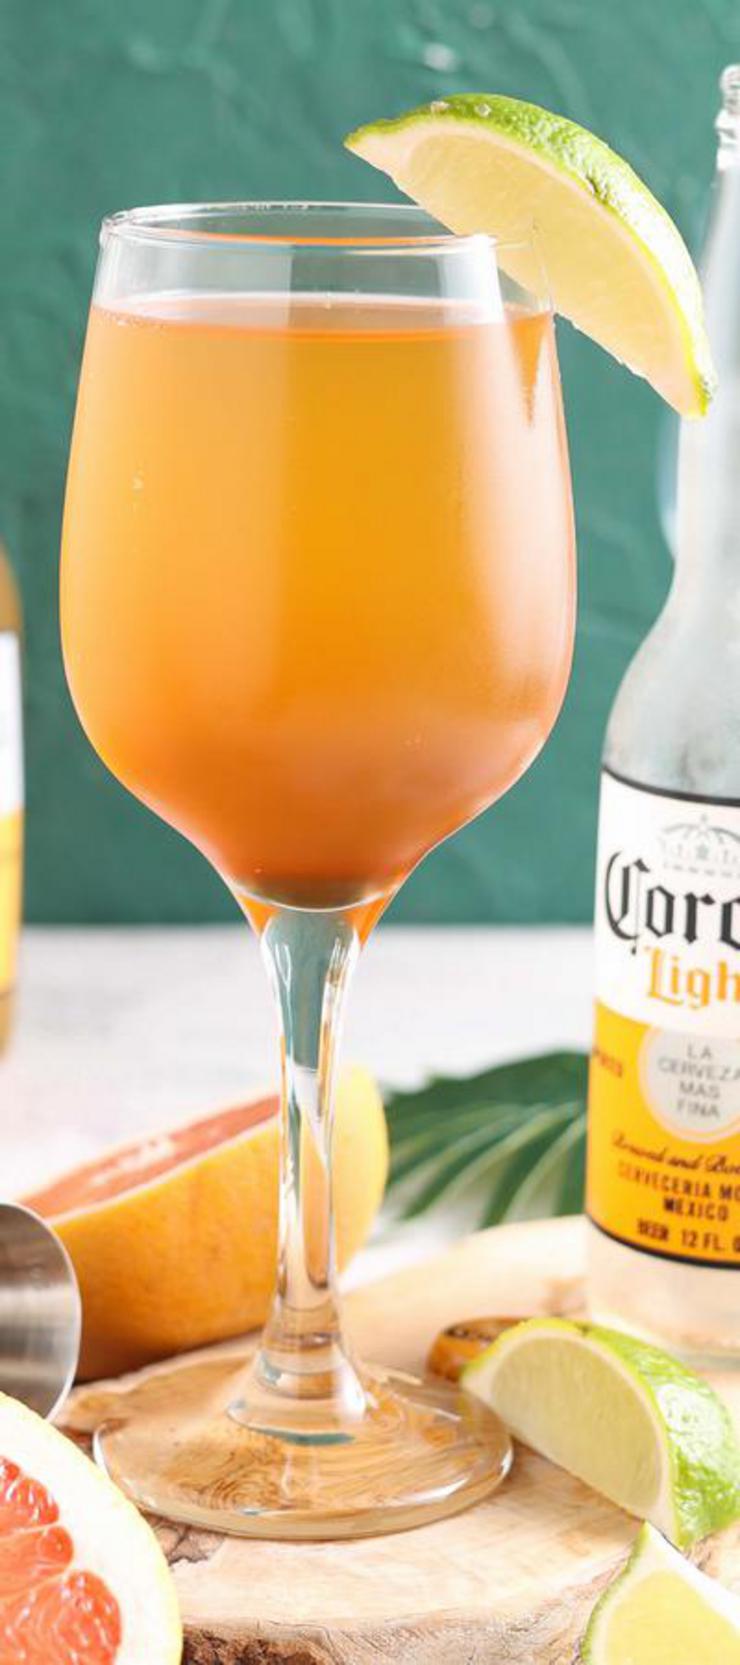 Alcohol Drinks Corona Sunrise